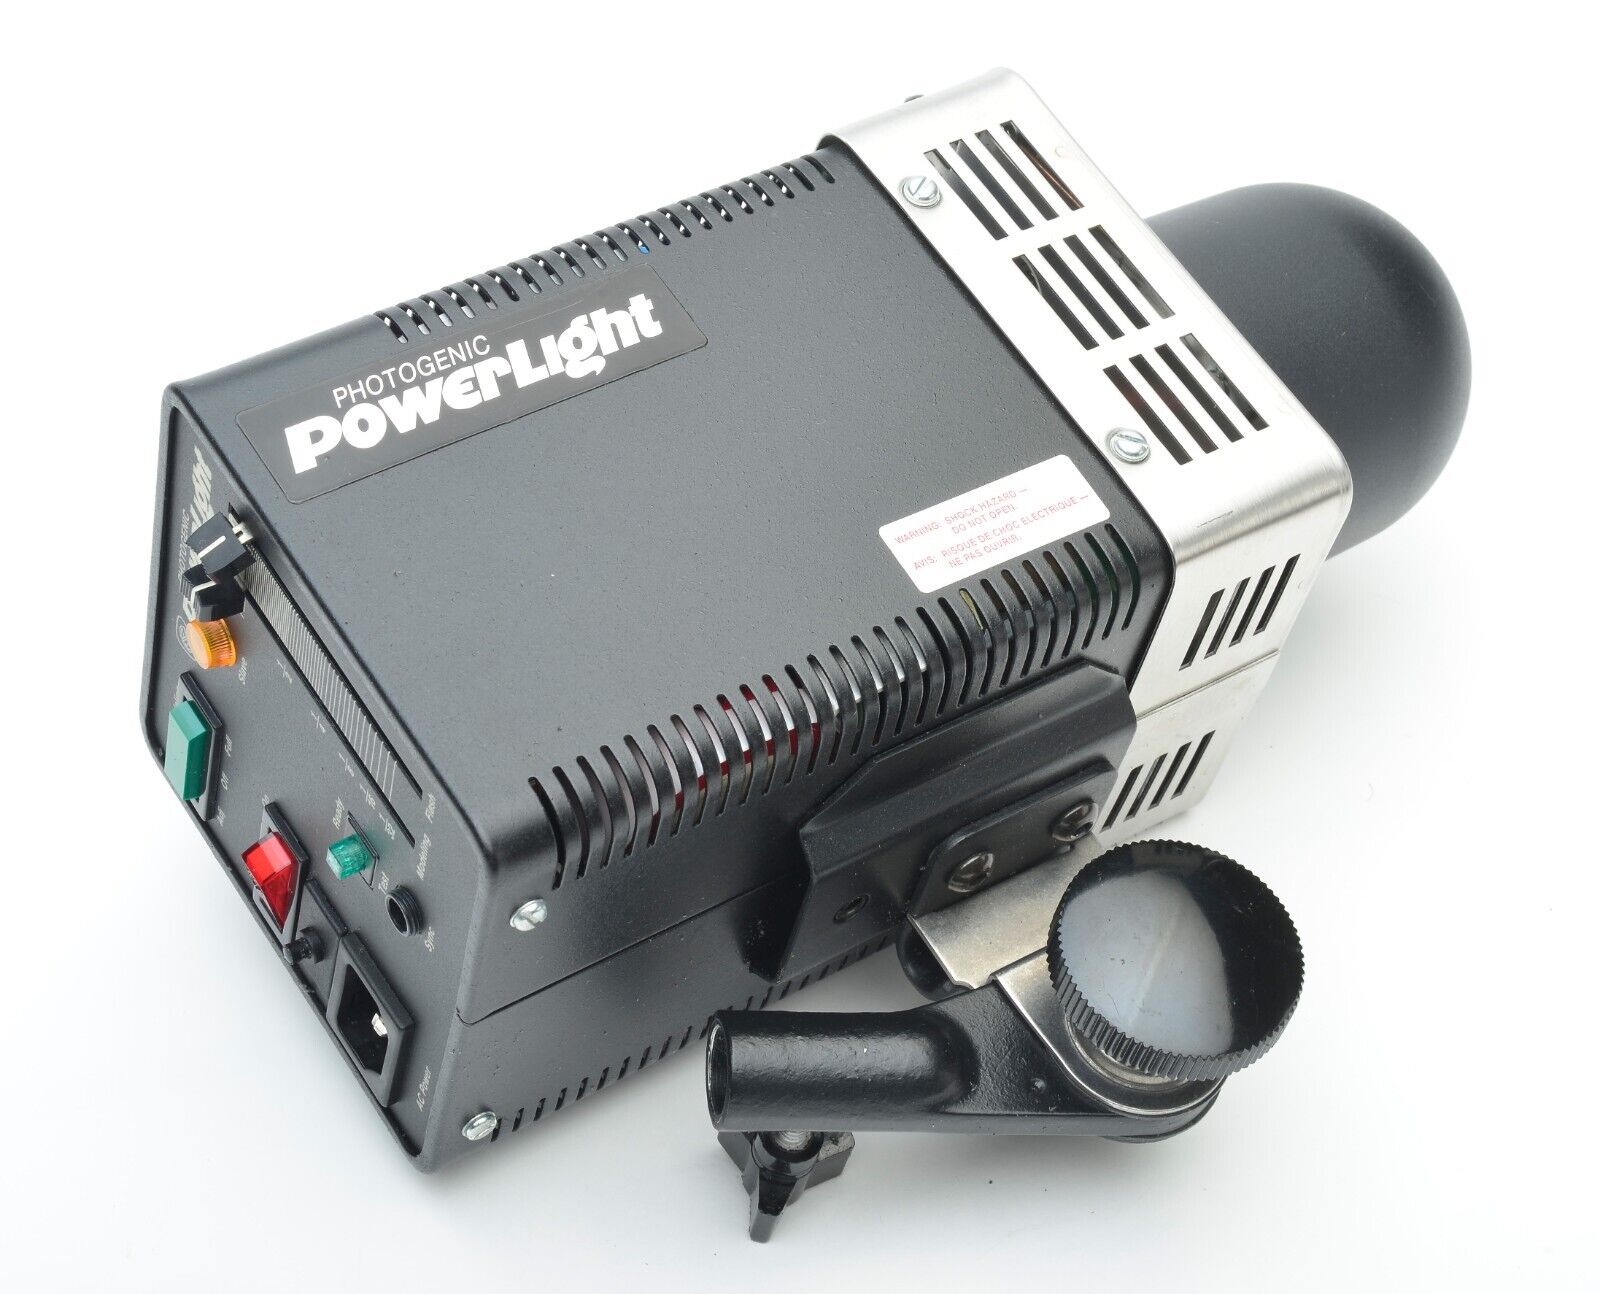 Photogenic Powerlight 600 Ws W/case